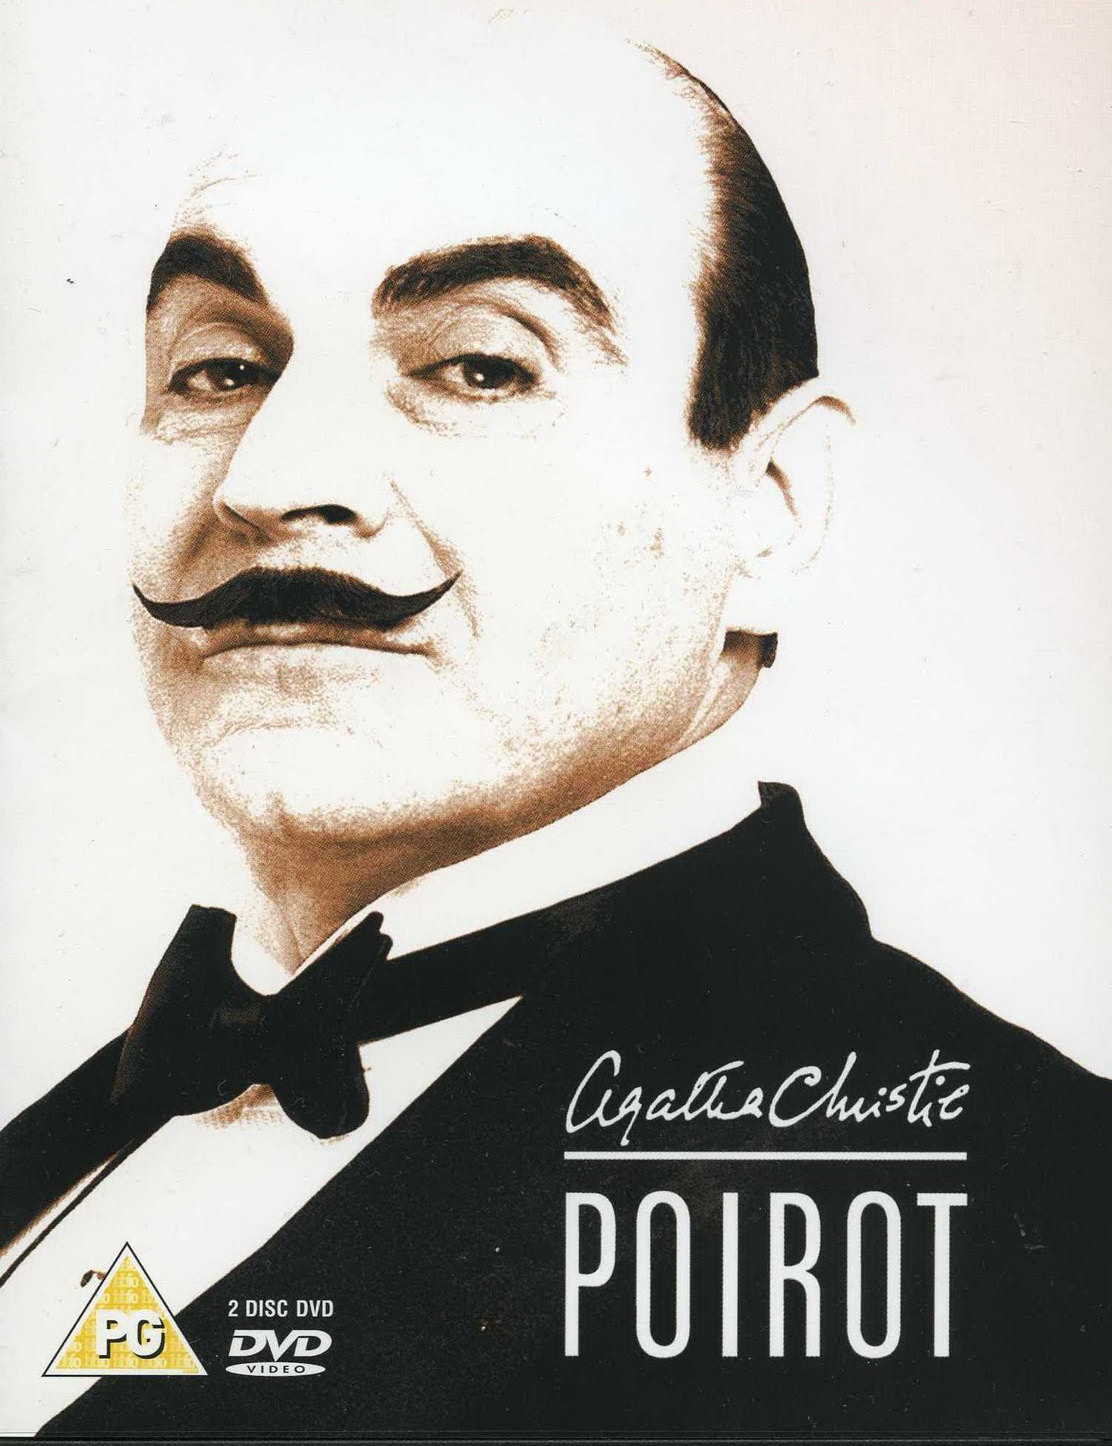 Hercule-Poirot-in-Black-Tie-DVD-Cover